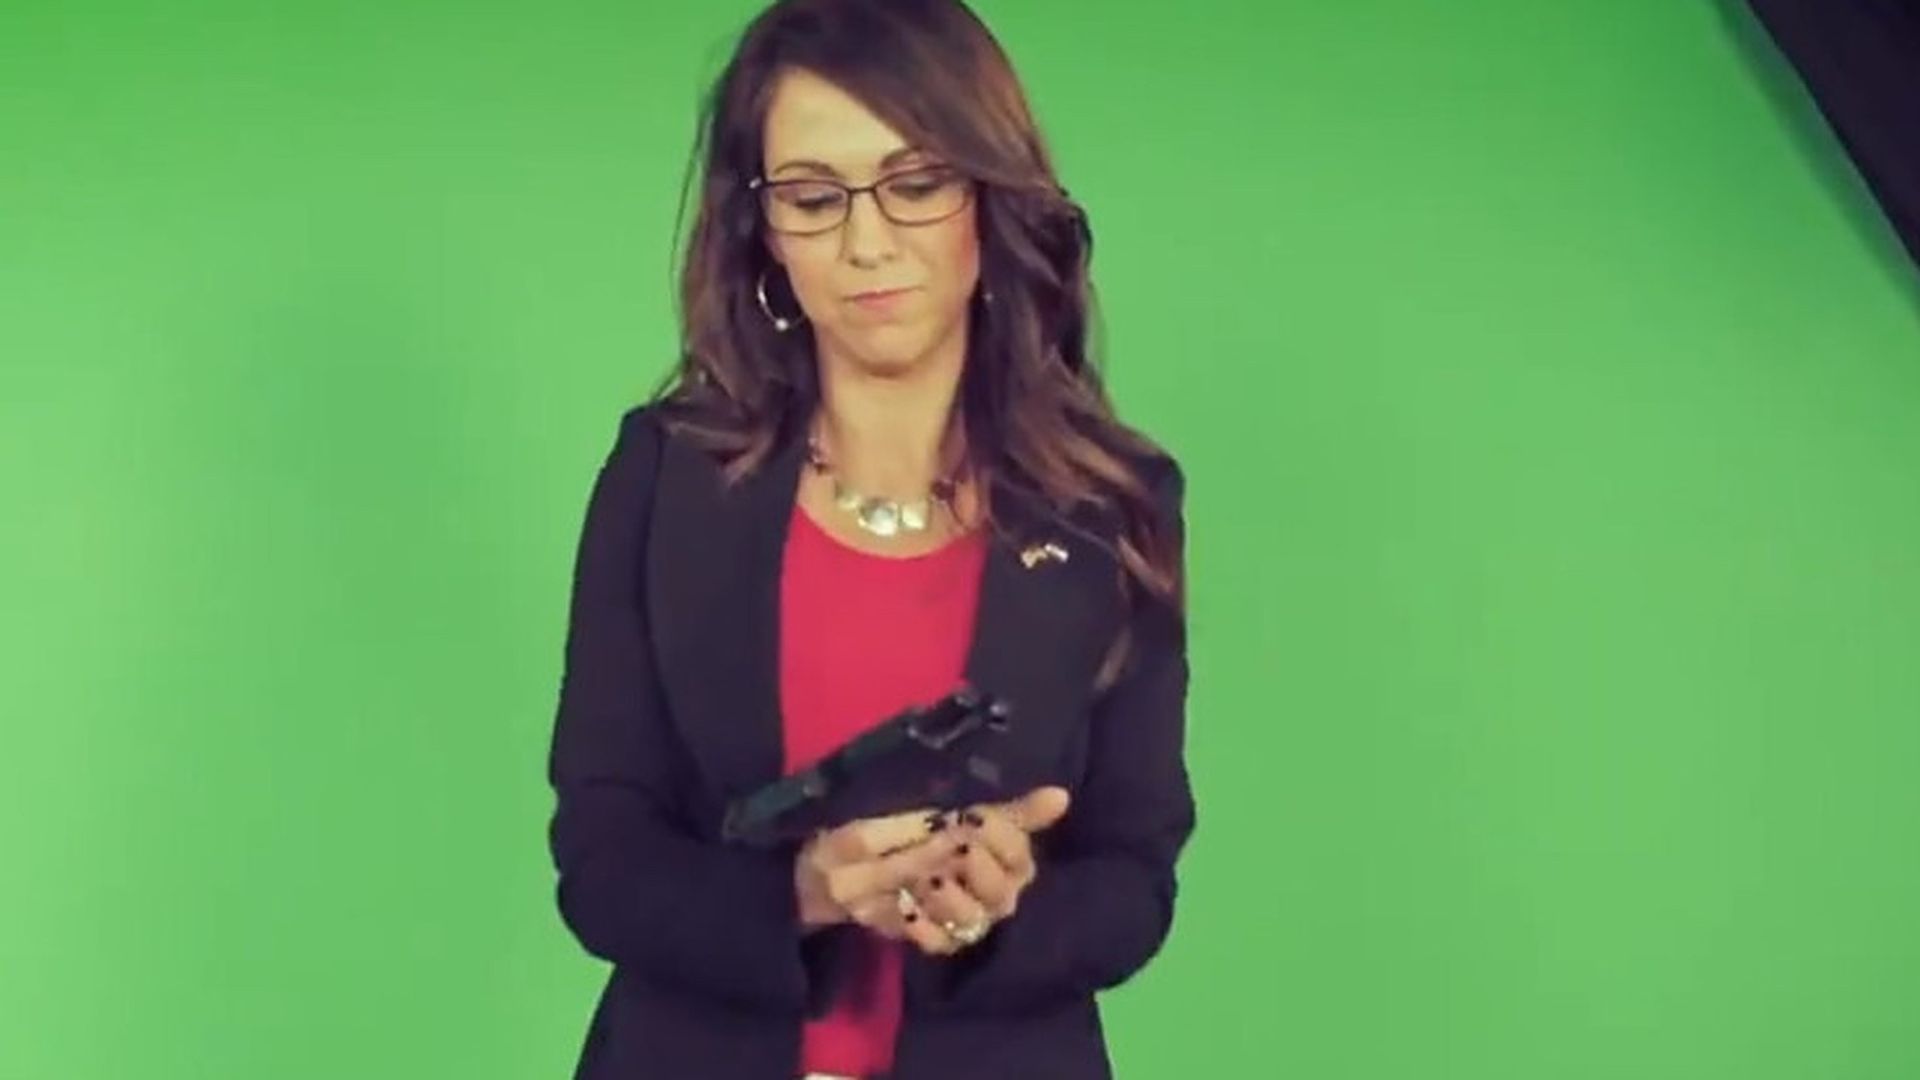 Rep. Lauren Boebert is seen holding a handgun in a screen grab from her new commercial.